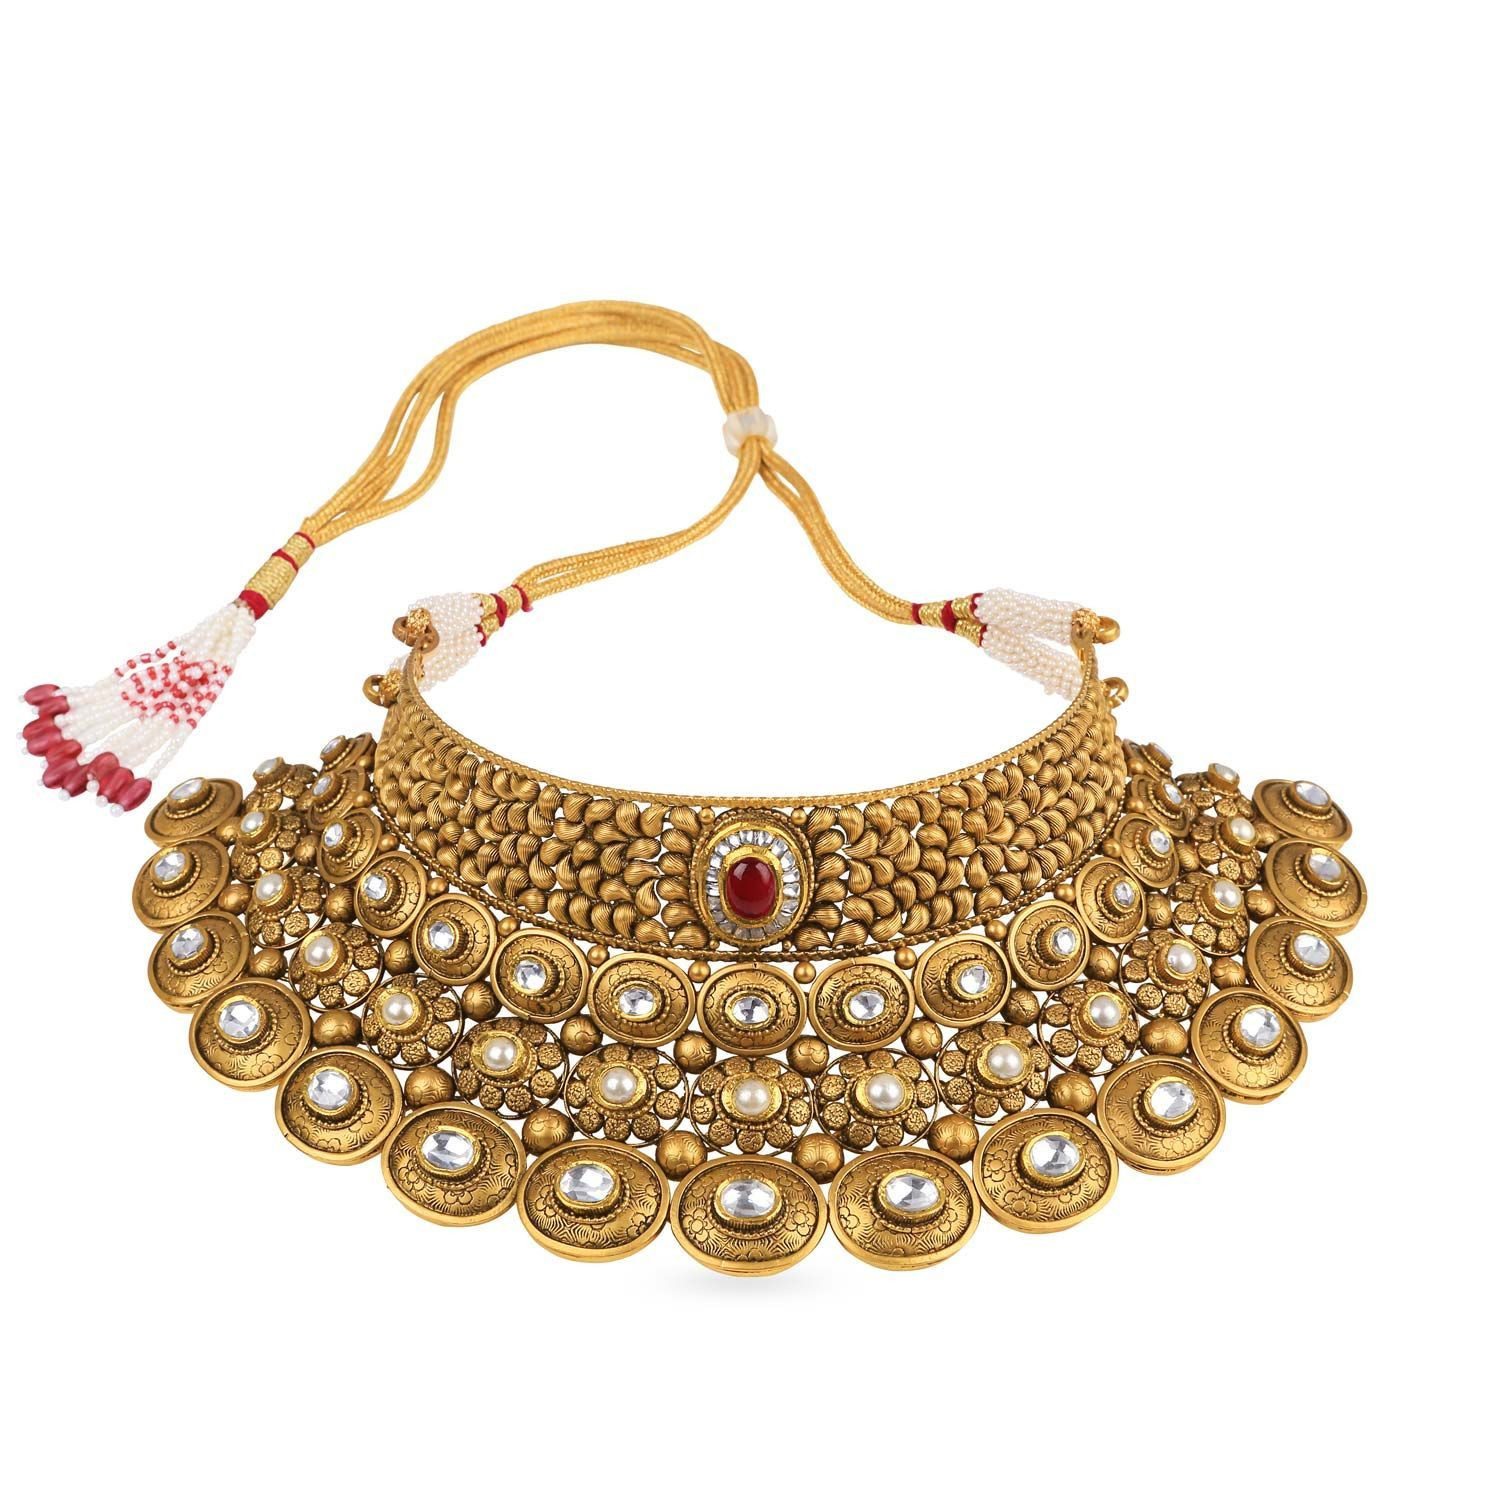 Malabar Gold New Necklace Collections Flash Sales, 50% OFF |  www.bridgepartnersllc.com